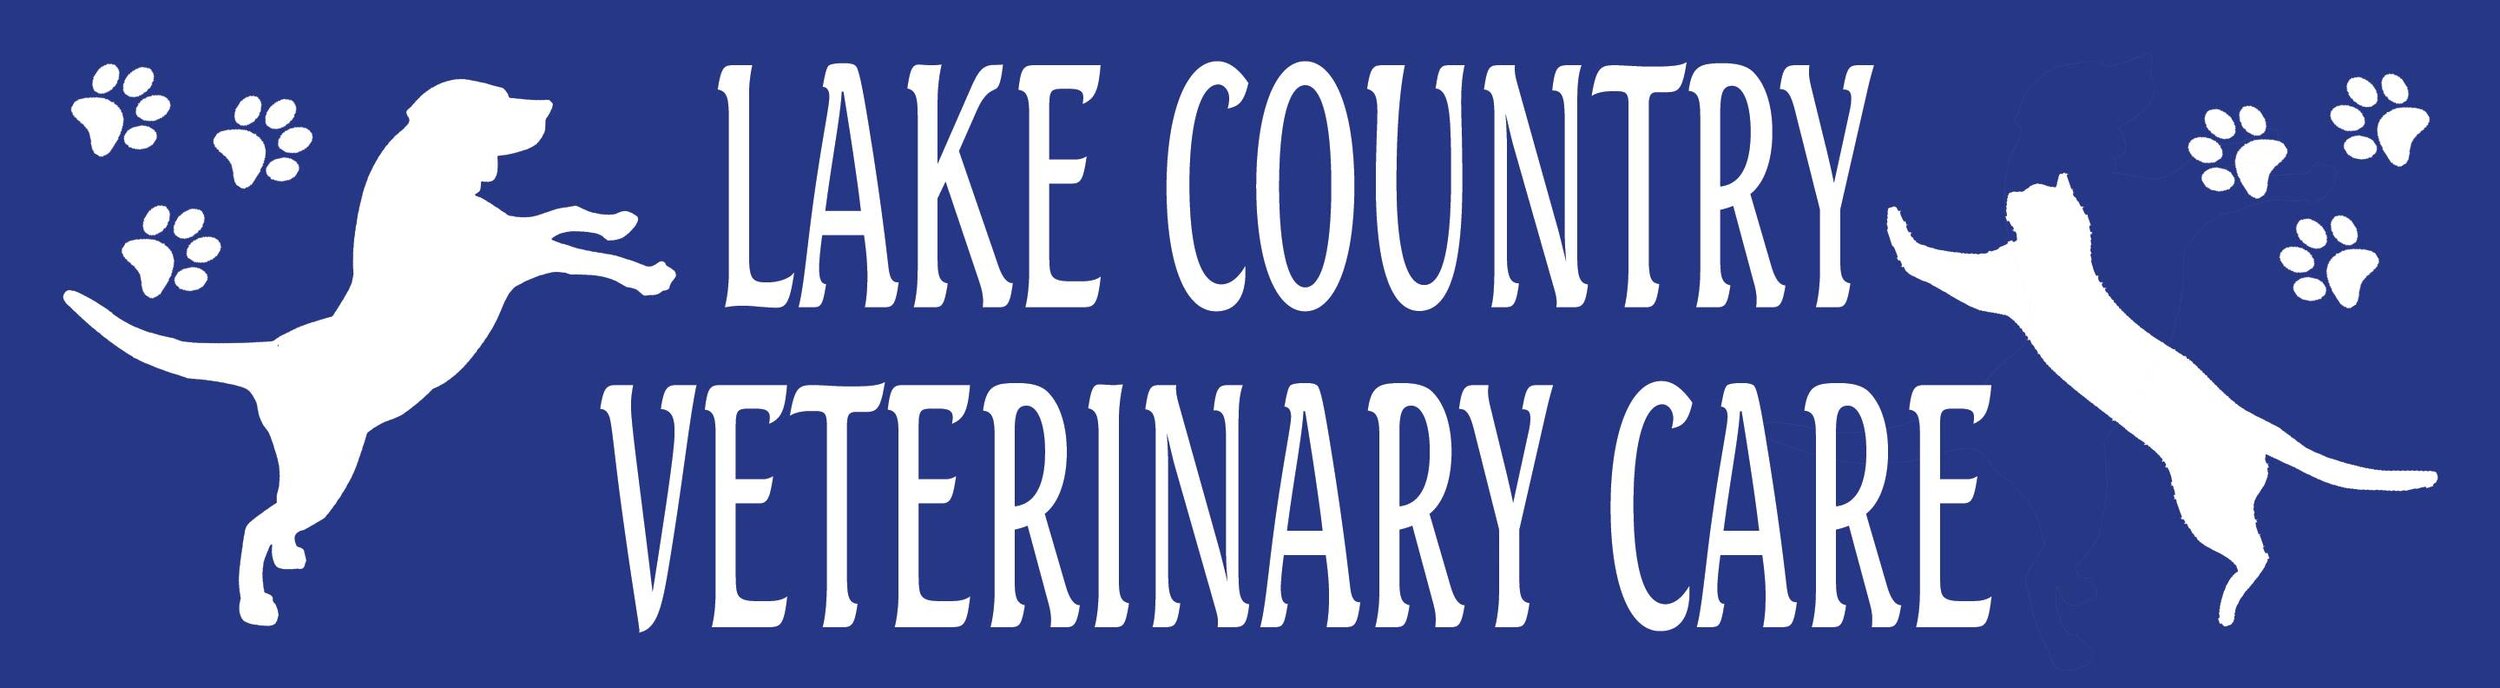 Lake Country Veterinary Care - Hartland